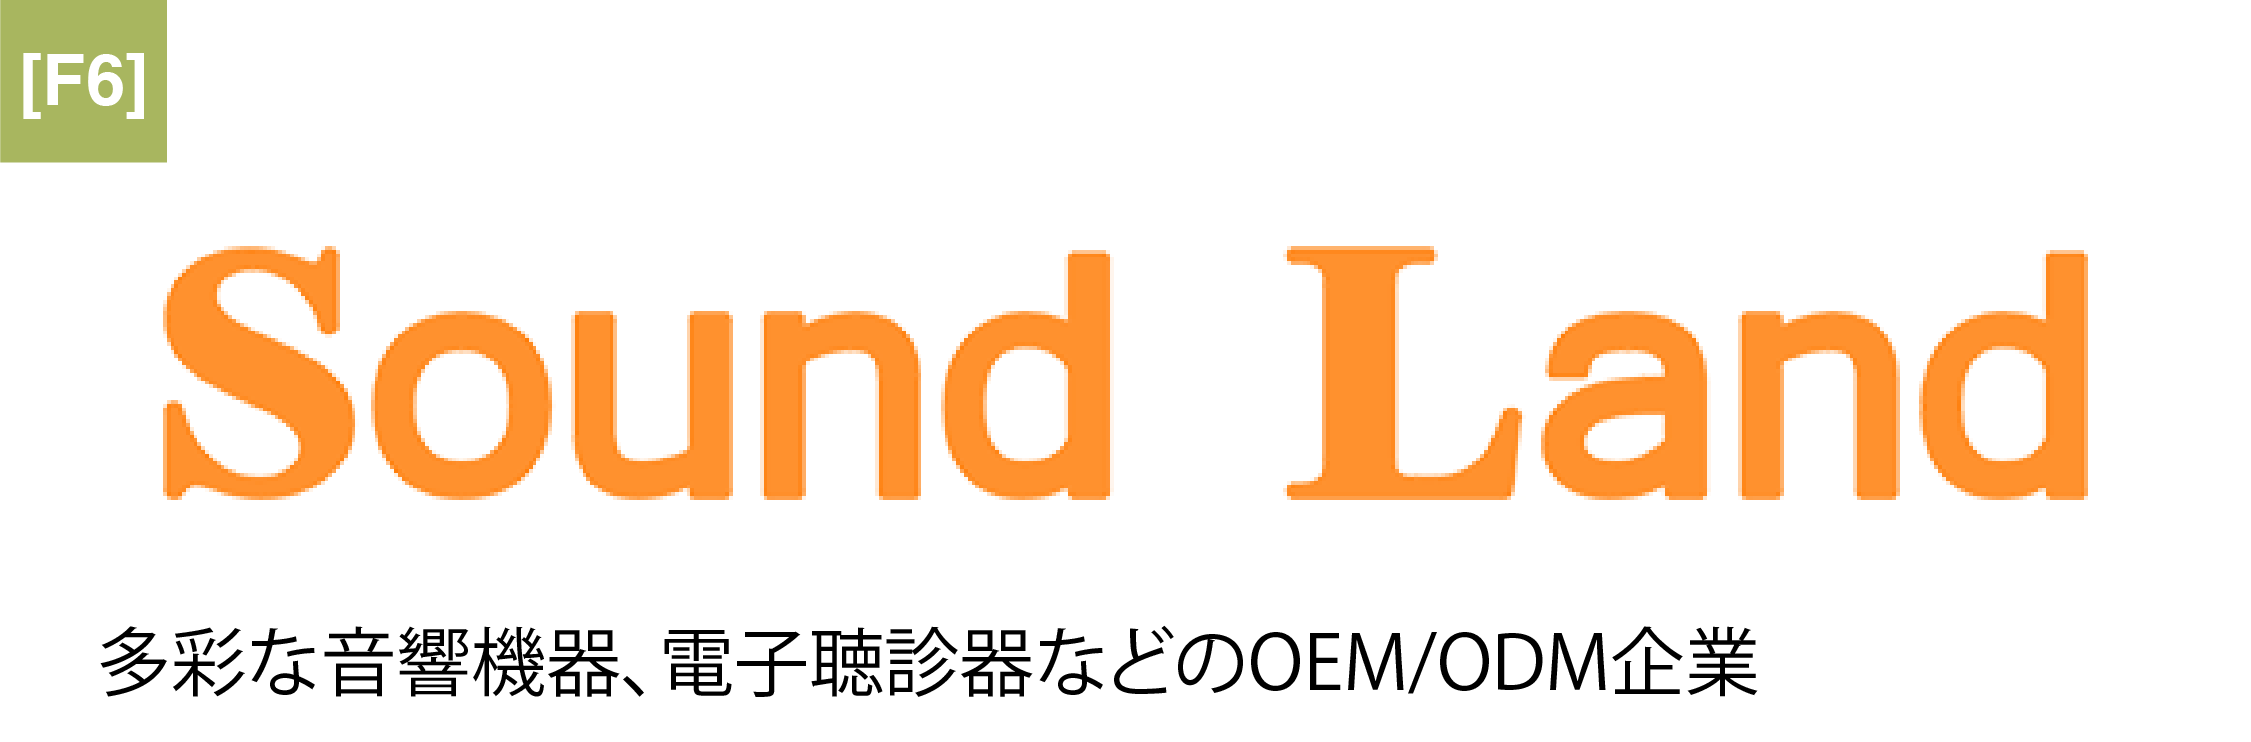 F6_SoundLand